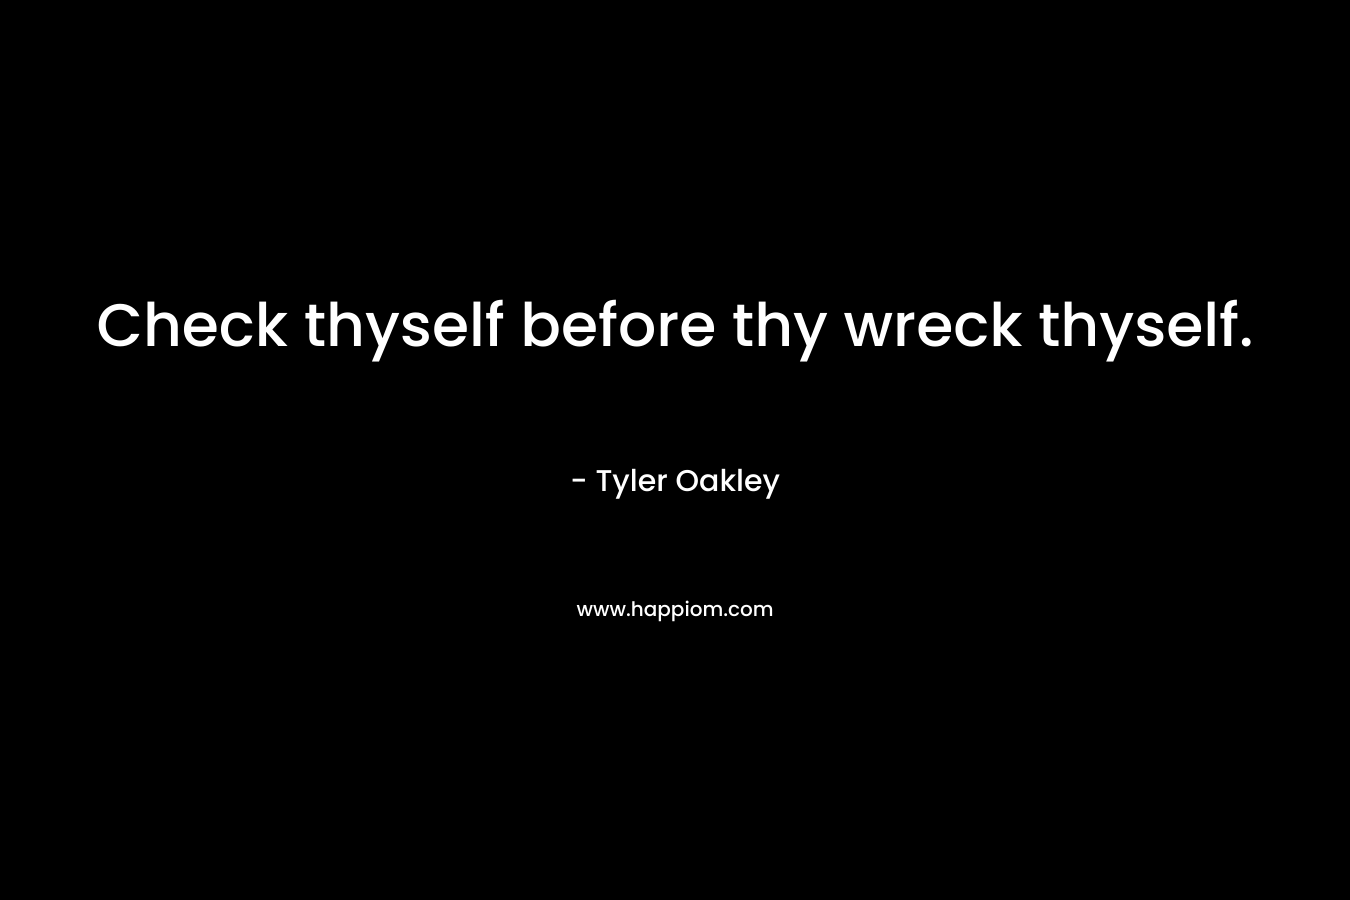 Check thyself before thy wreck thyself.